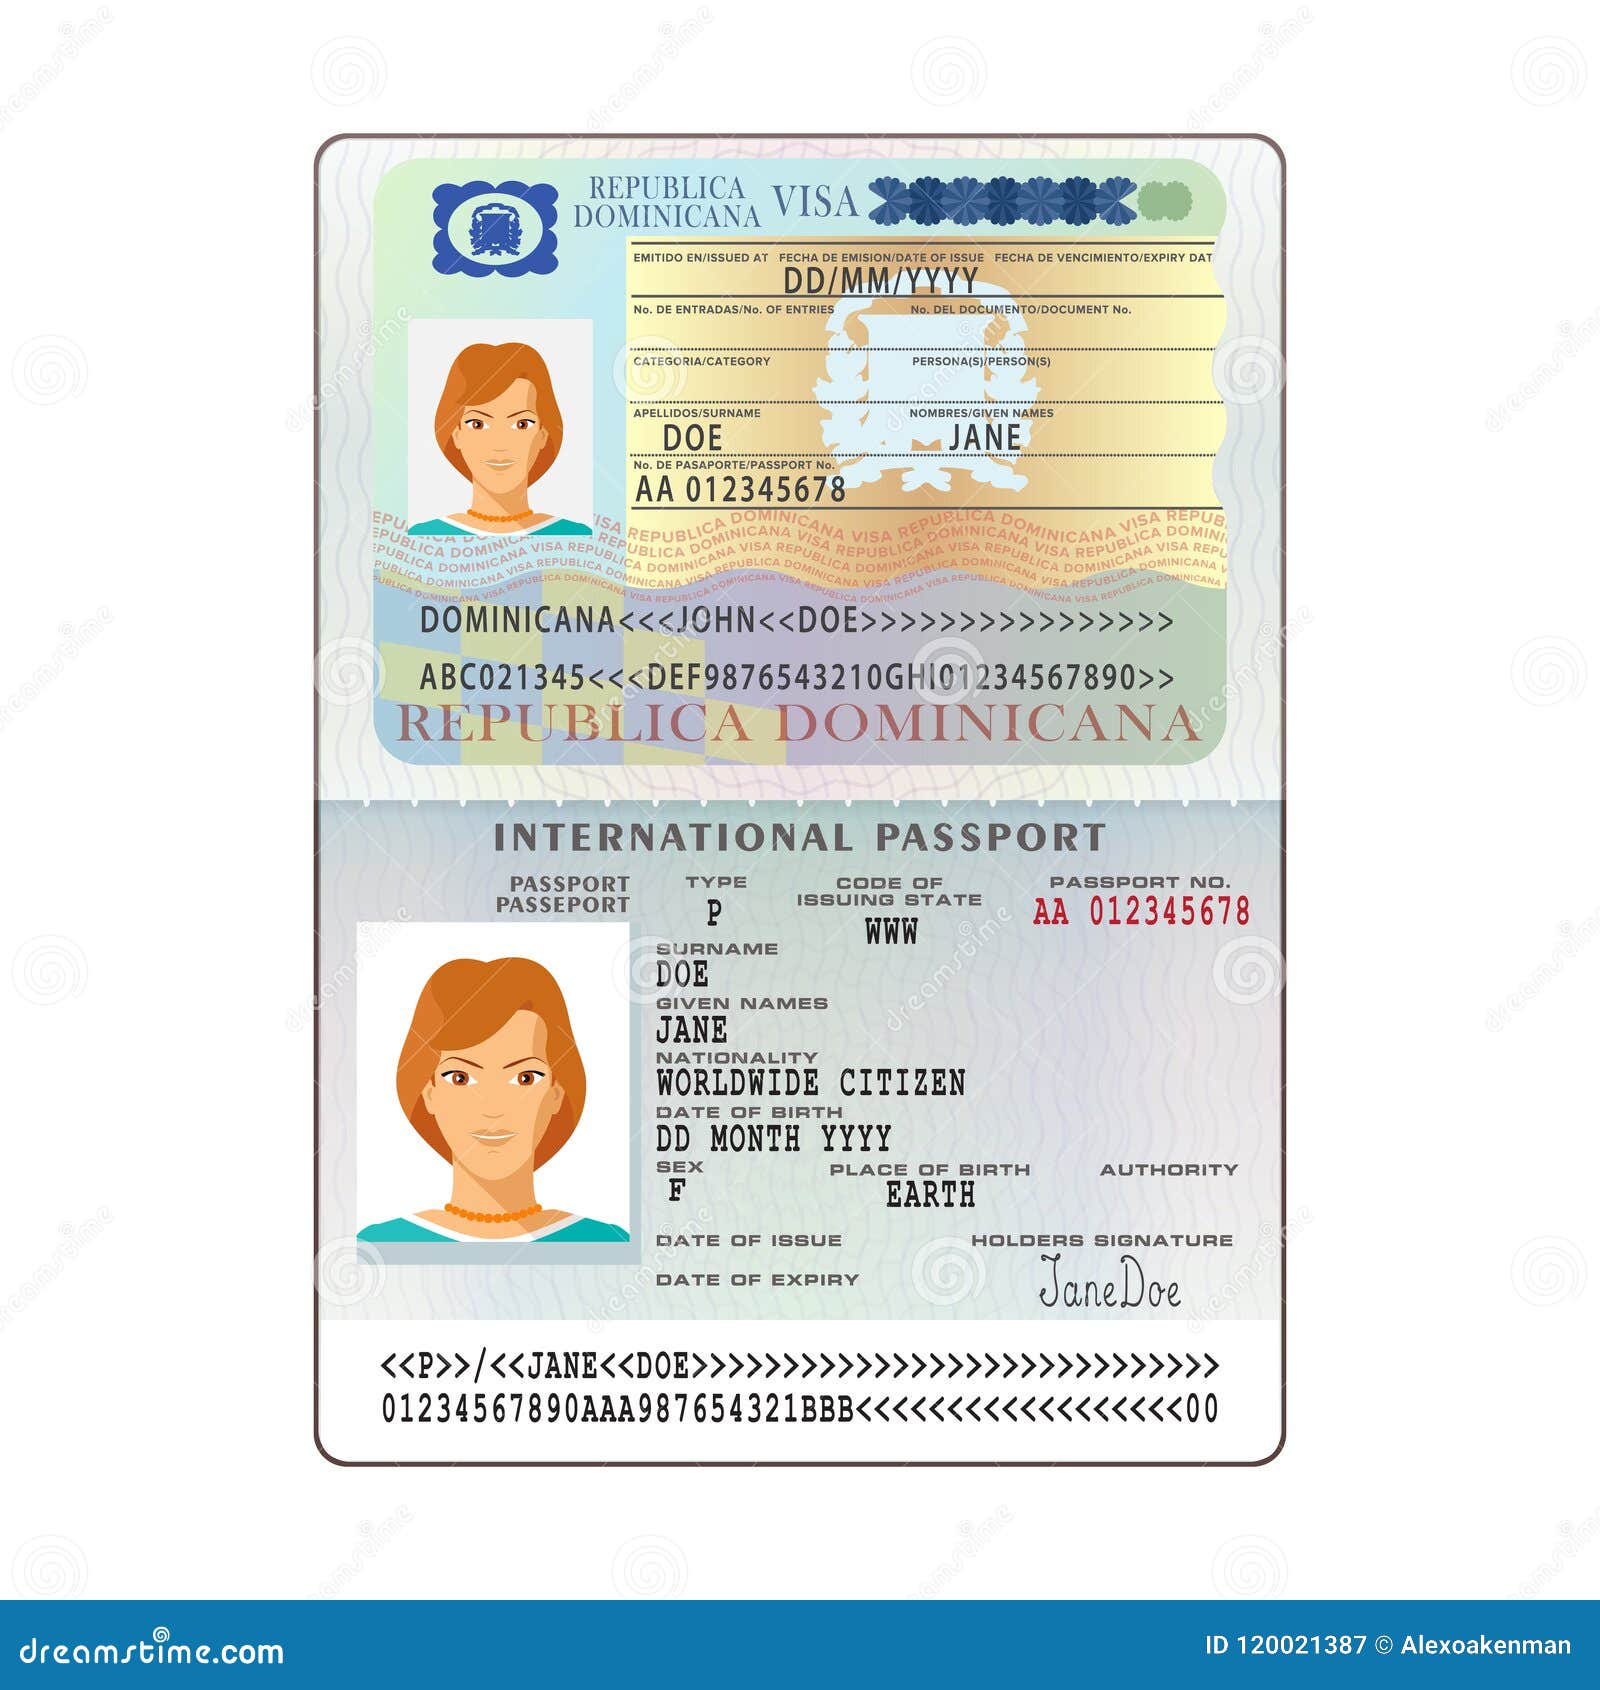  international open passport with dominicana visa